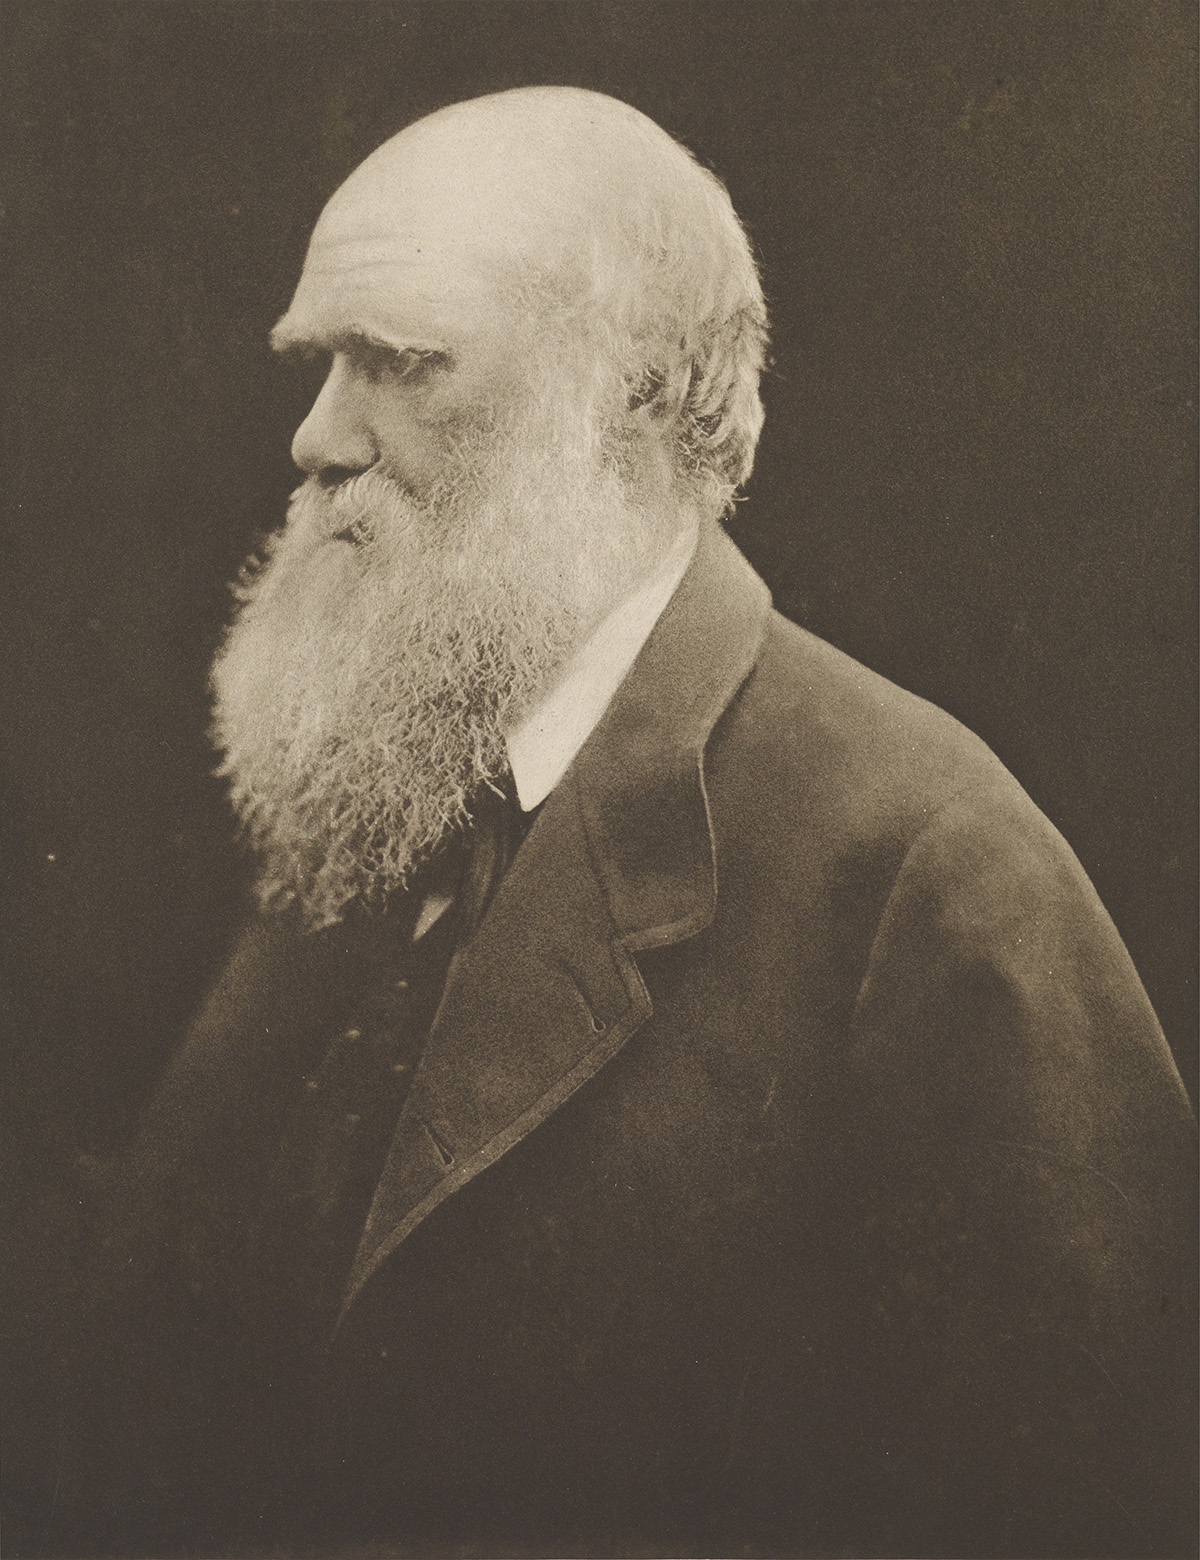 (JULIA MARGARET CAMERON) (1815-1879) Charles Darwin.